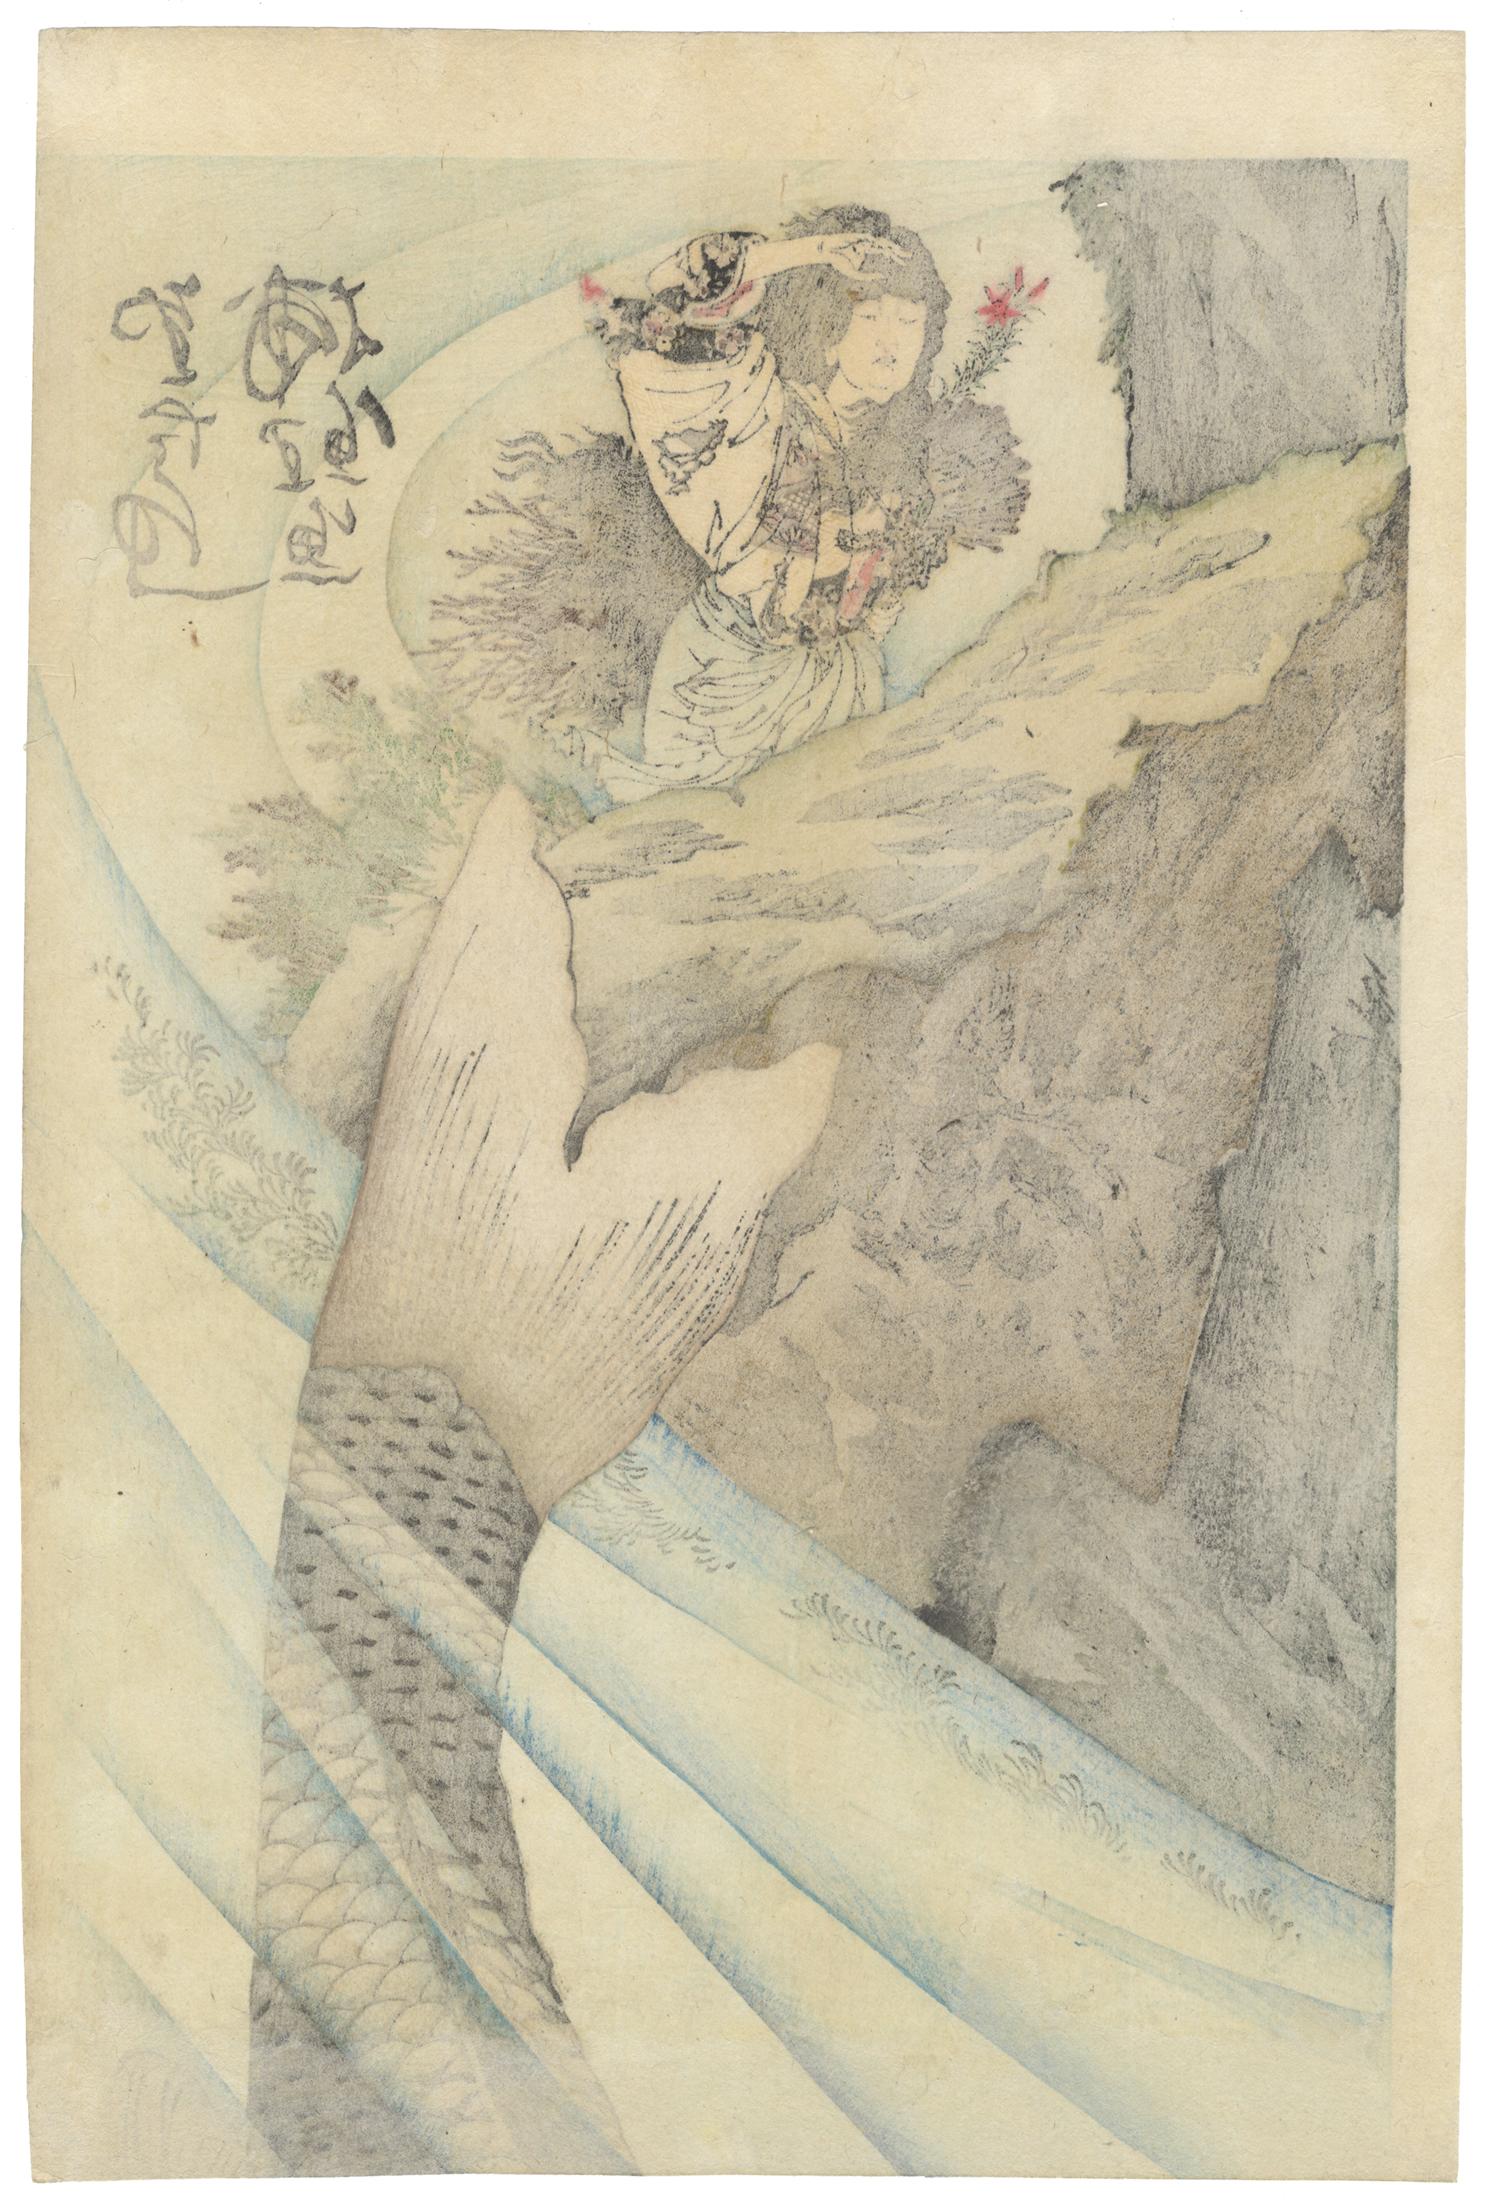 Artist: Tsukioka Yoshitoshi (1839 - 1892) 
Title: Kintarō Captures the Carp 
Publisher: Hasegawa Tsunejiro 
Date: 1885 
(T) 25.6 x 37.8 cm 
(B) 26.7 x 36 cm

Kintarō, often translated as the Golden Boy, is a prevalent figure in Japanese folklore. He